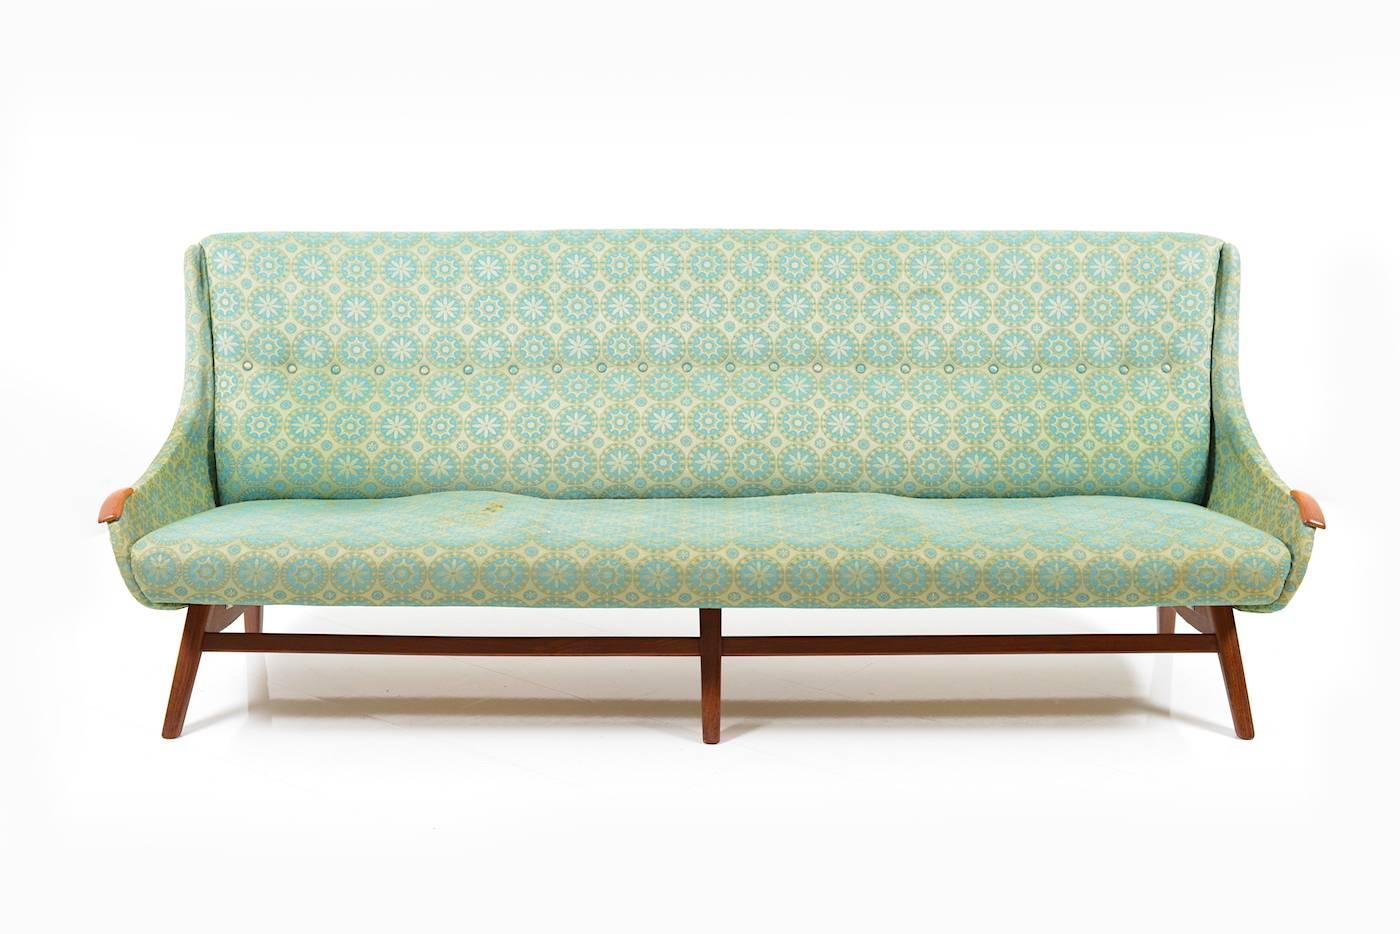 Scandinavian Modern Prototype Sofa by the Danish Designer & Furniture Maker Svend Skipper, 1950s For Sale